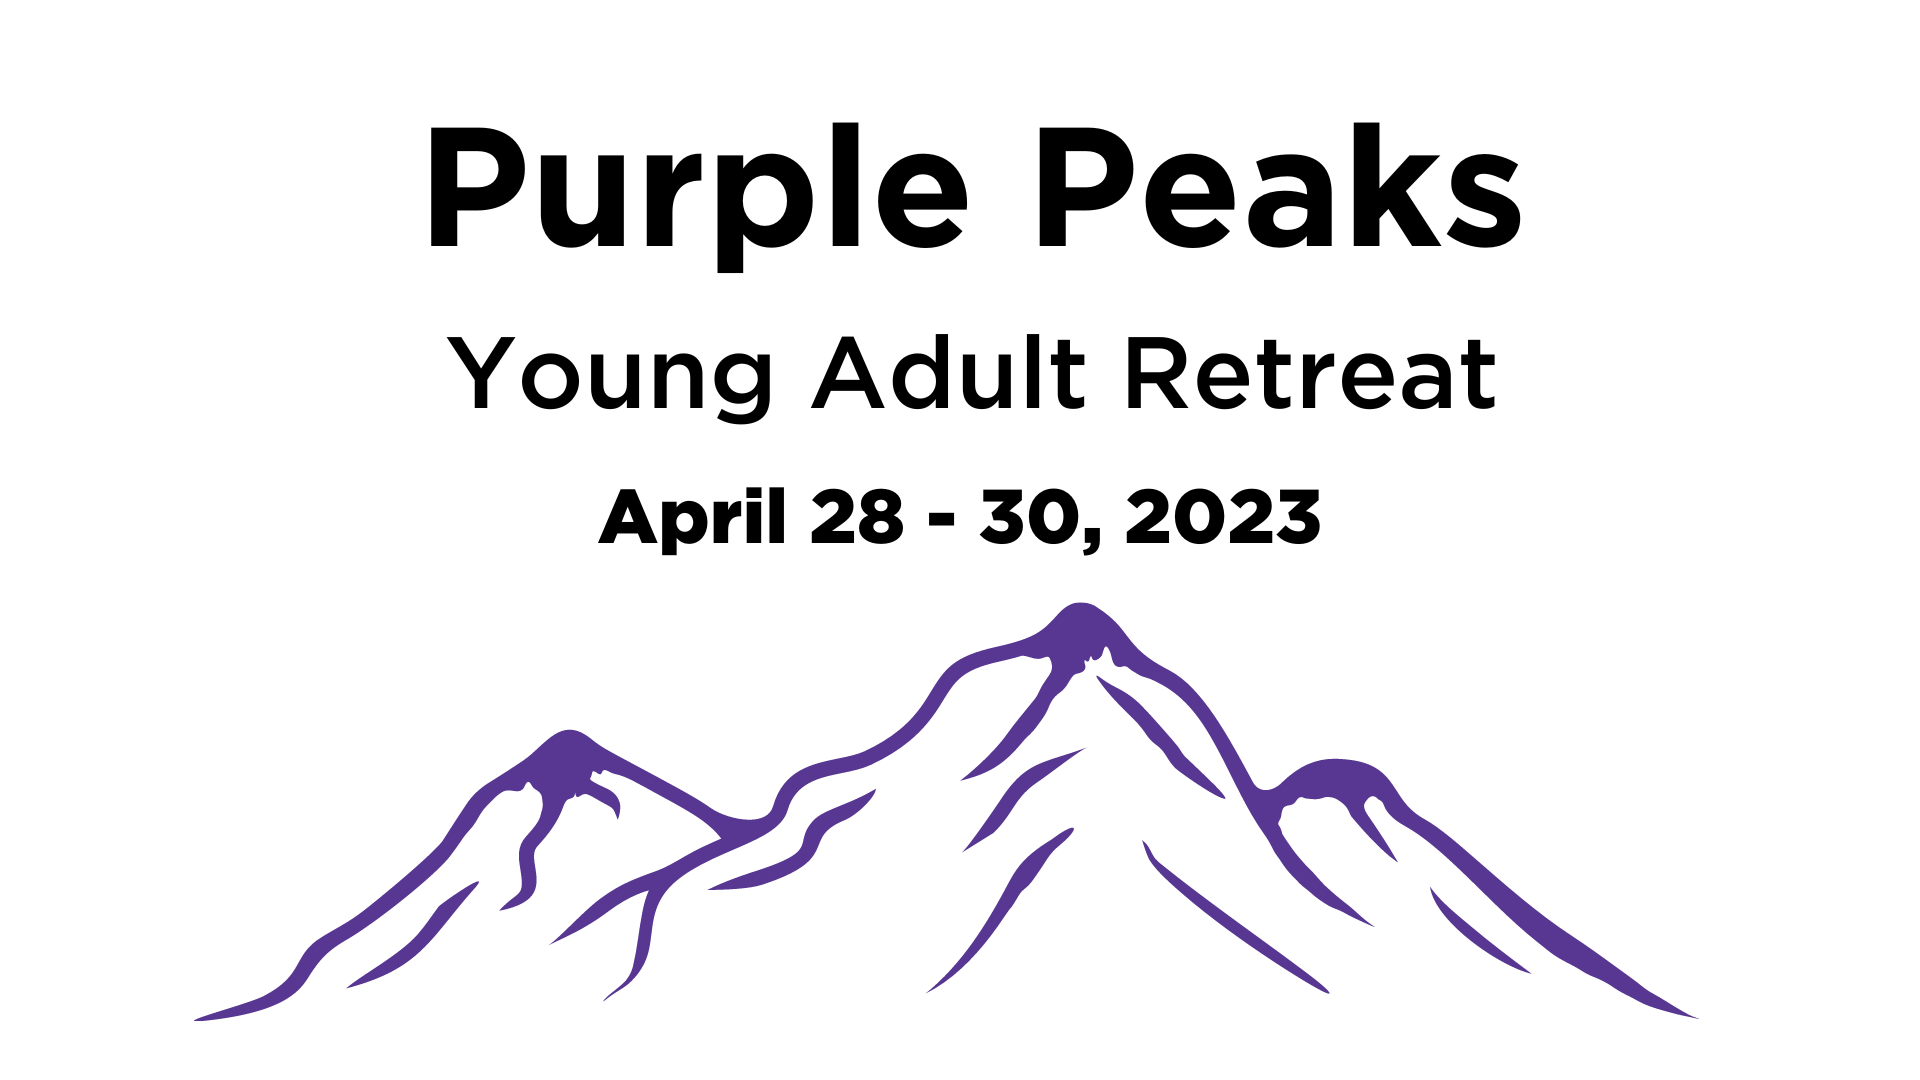 Purple Peaks Young Adult Retreat April 28-30